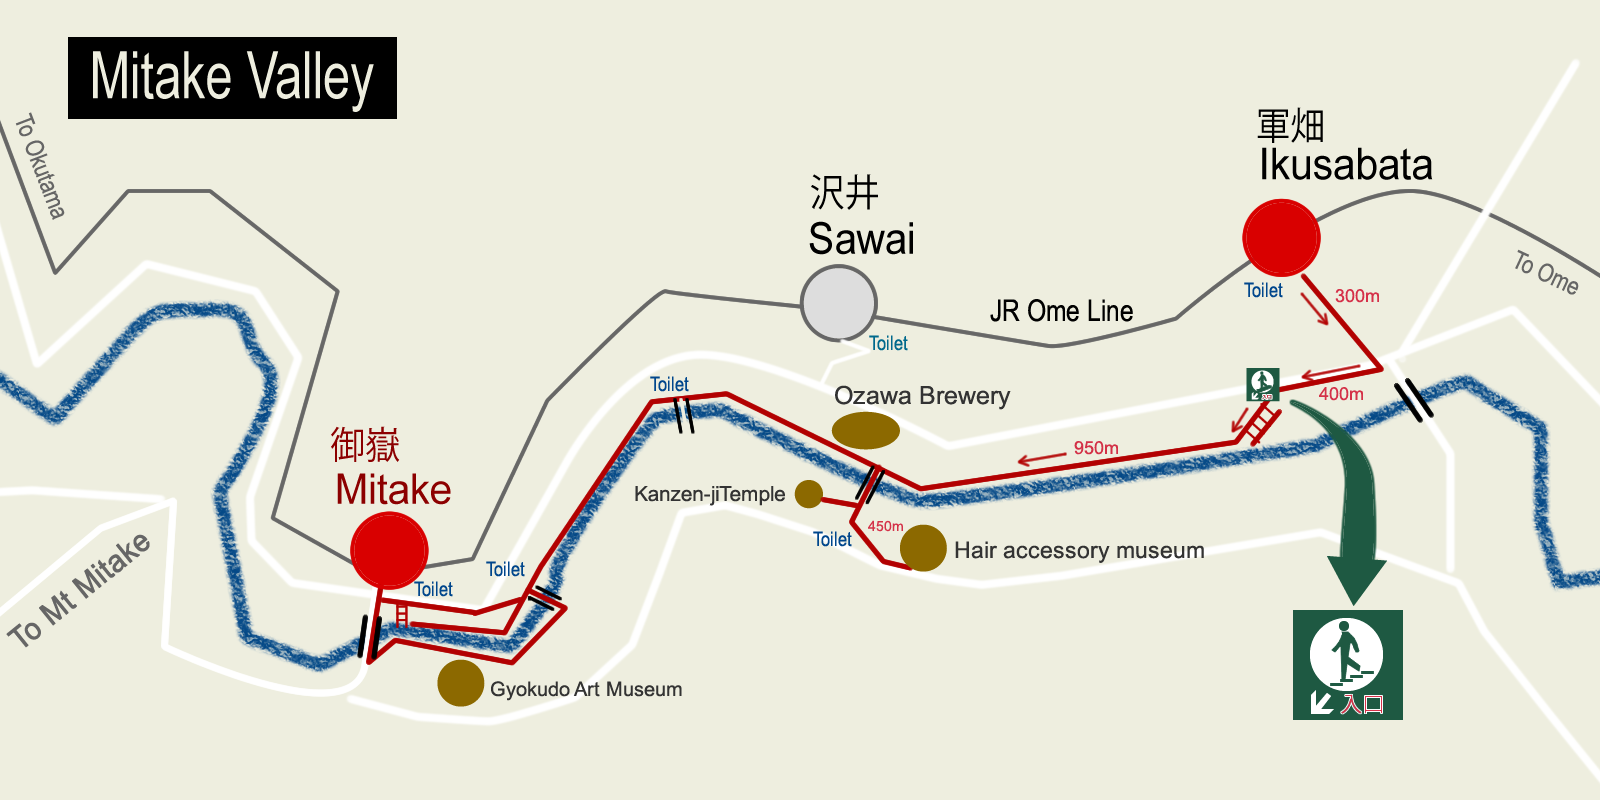 Matake Valley Walking Route Map